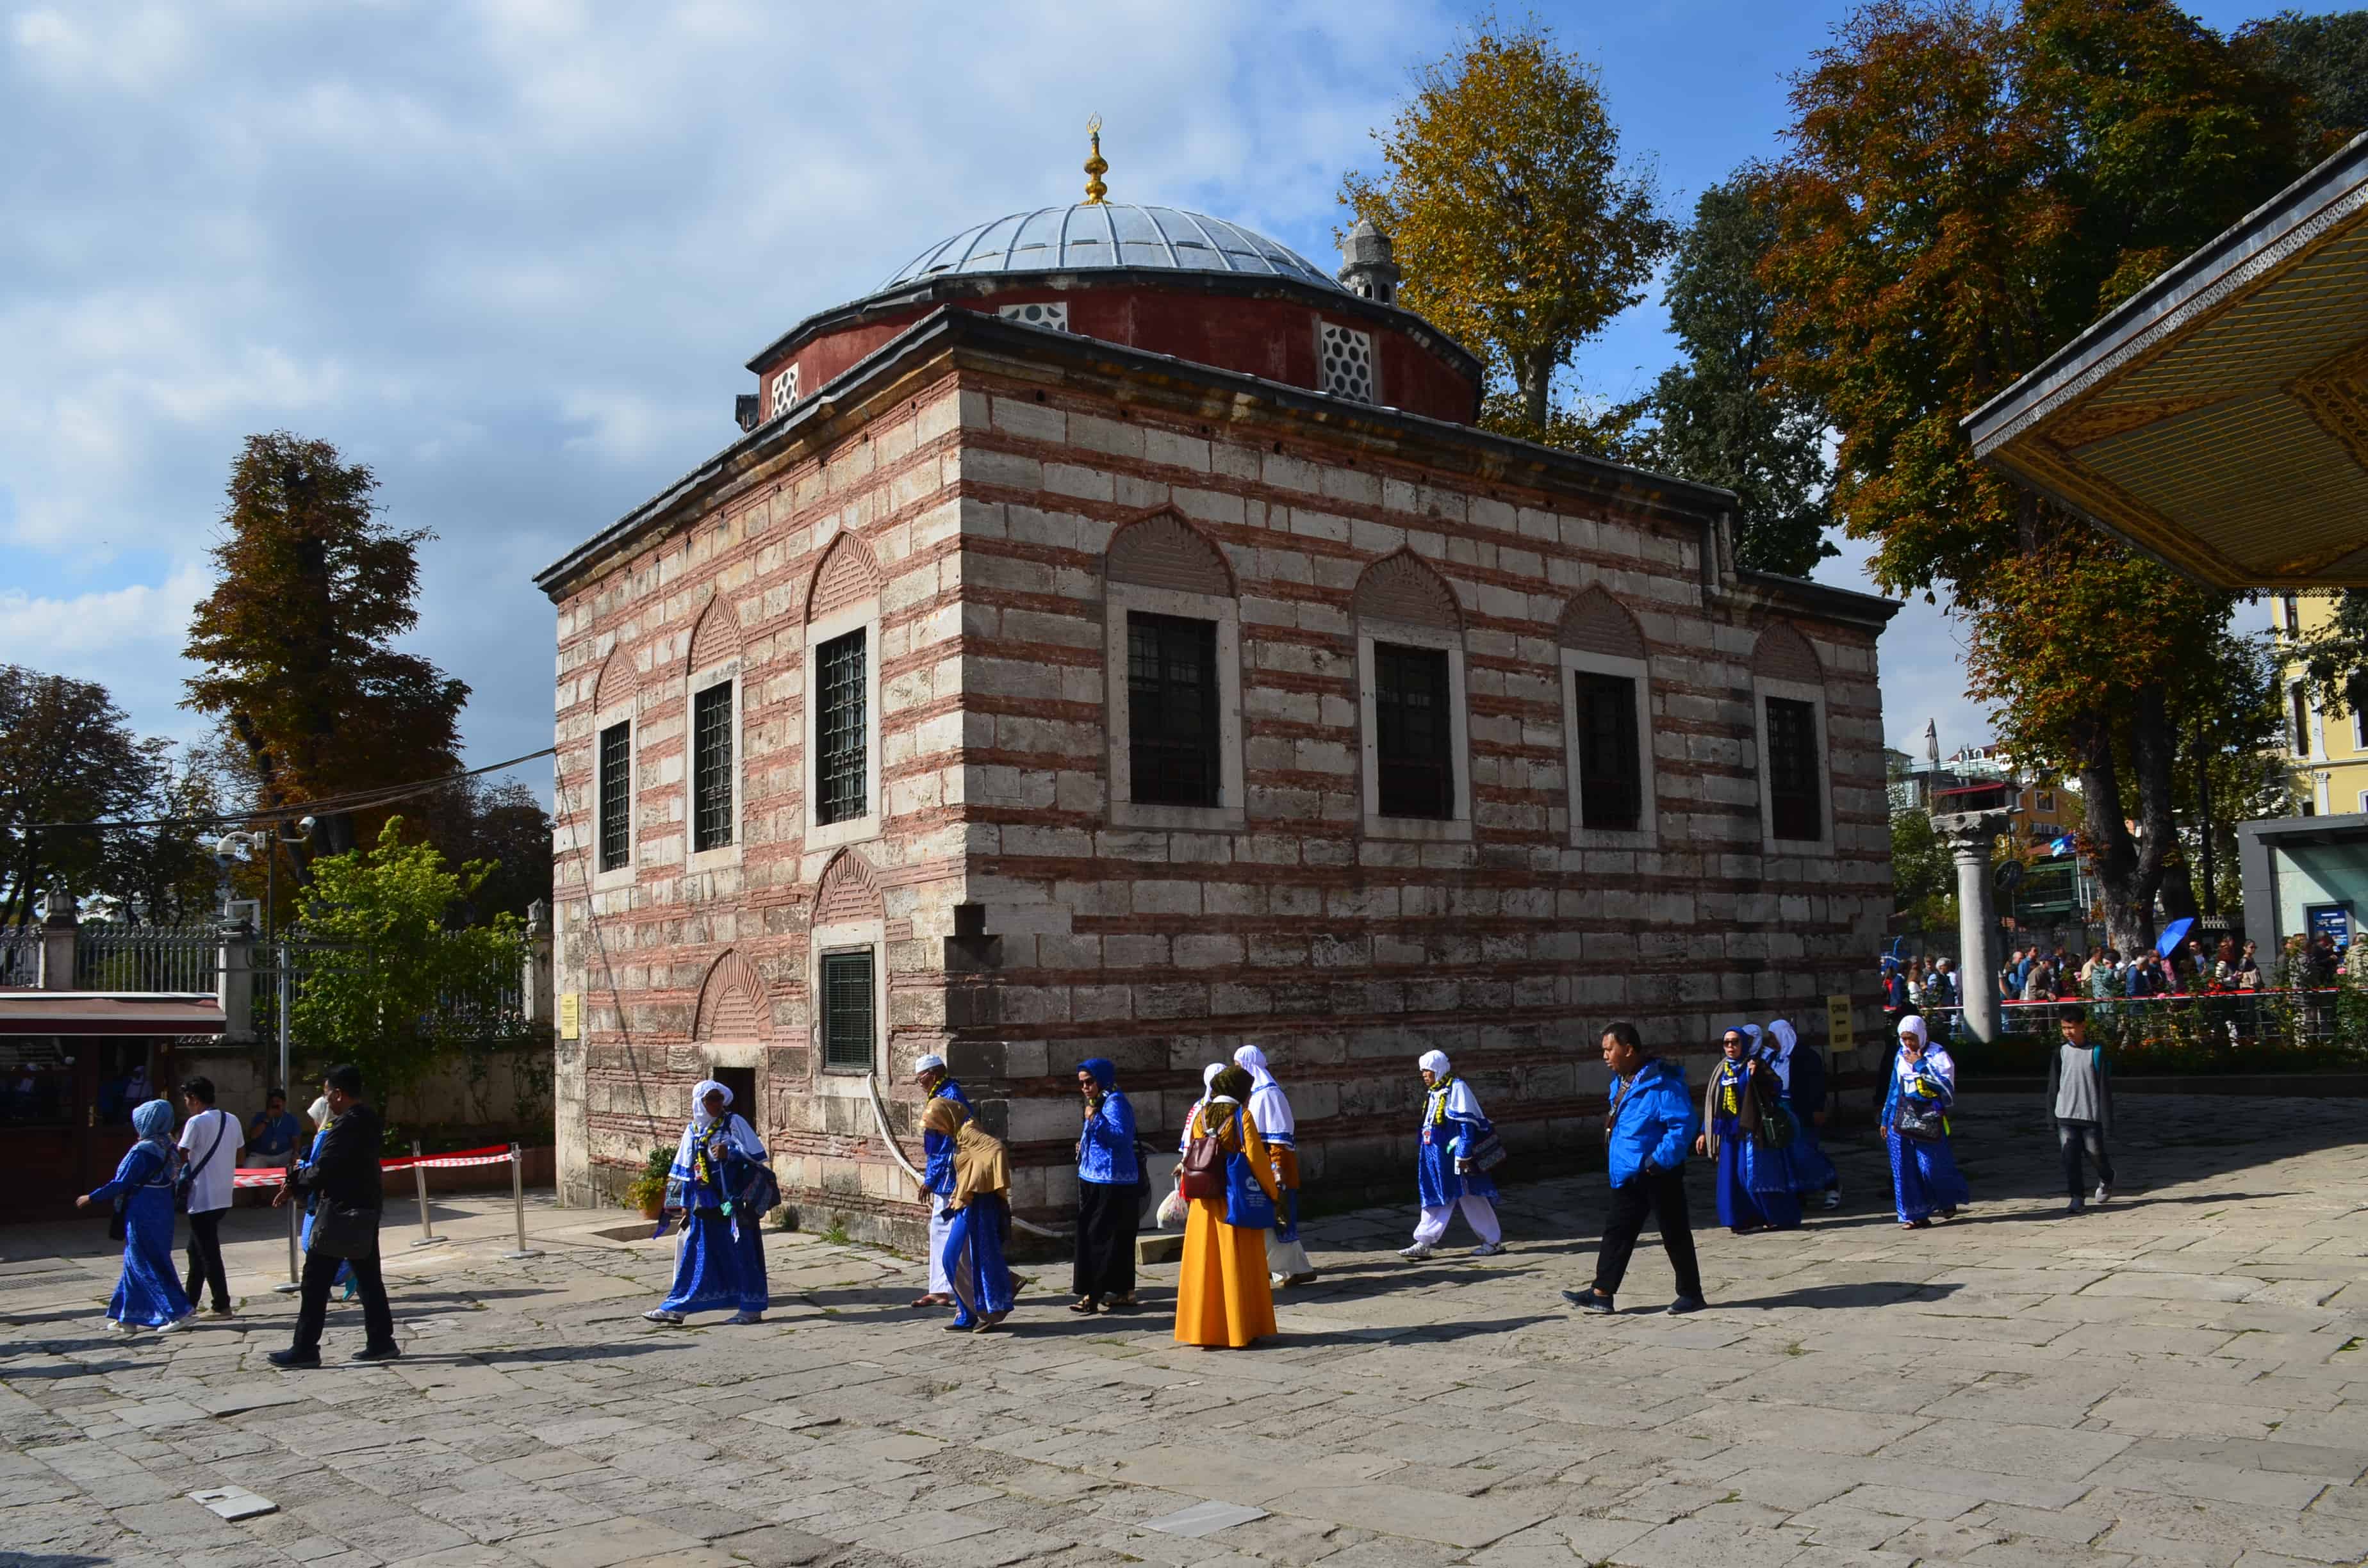 Primary school at Hagia Sophia in Istanbul, Turkey